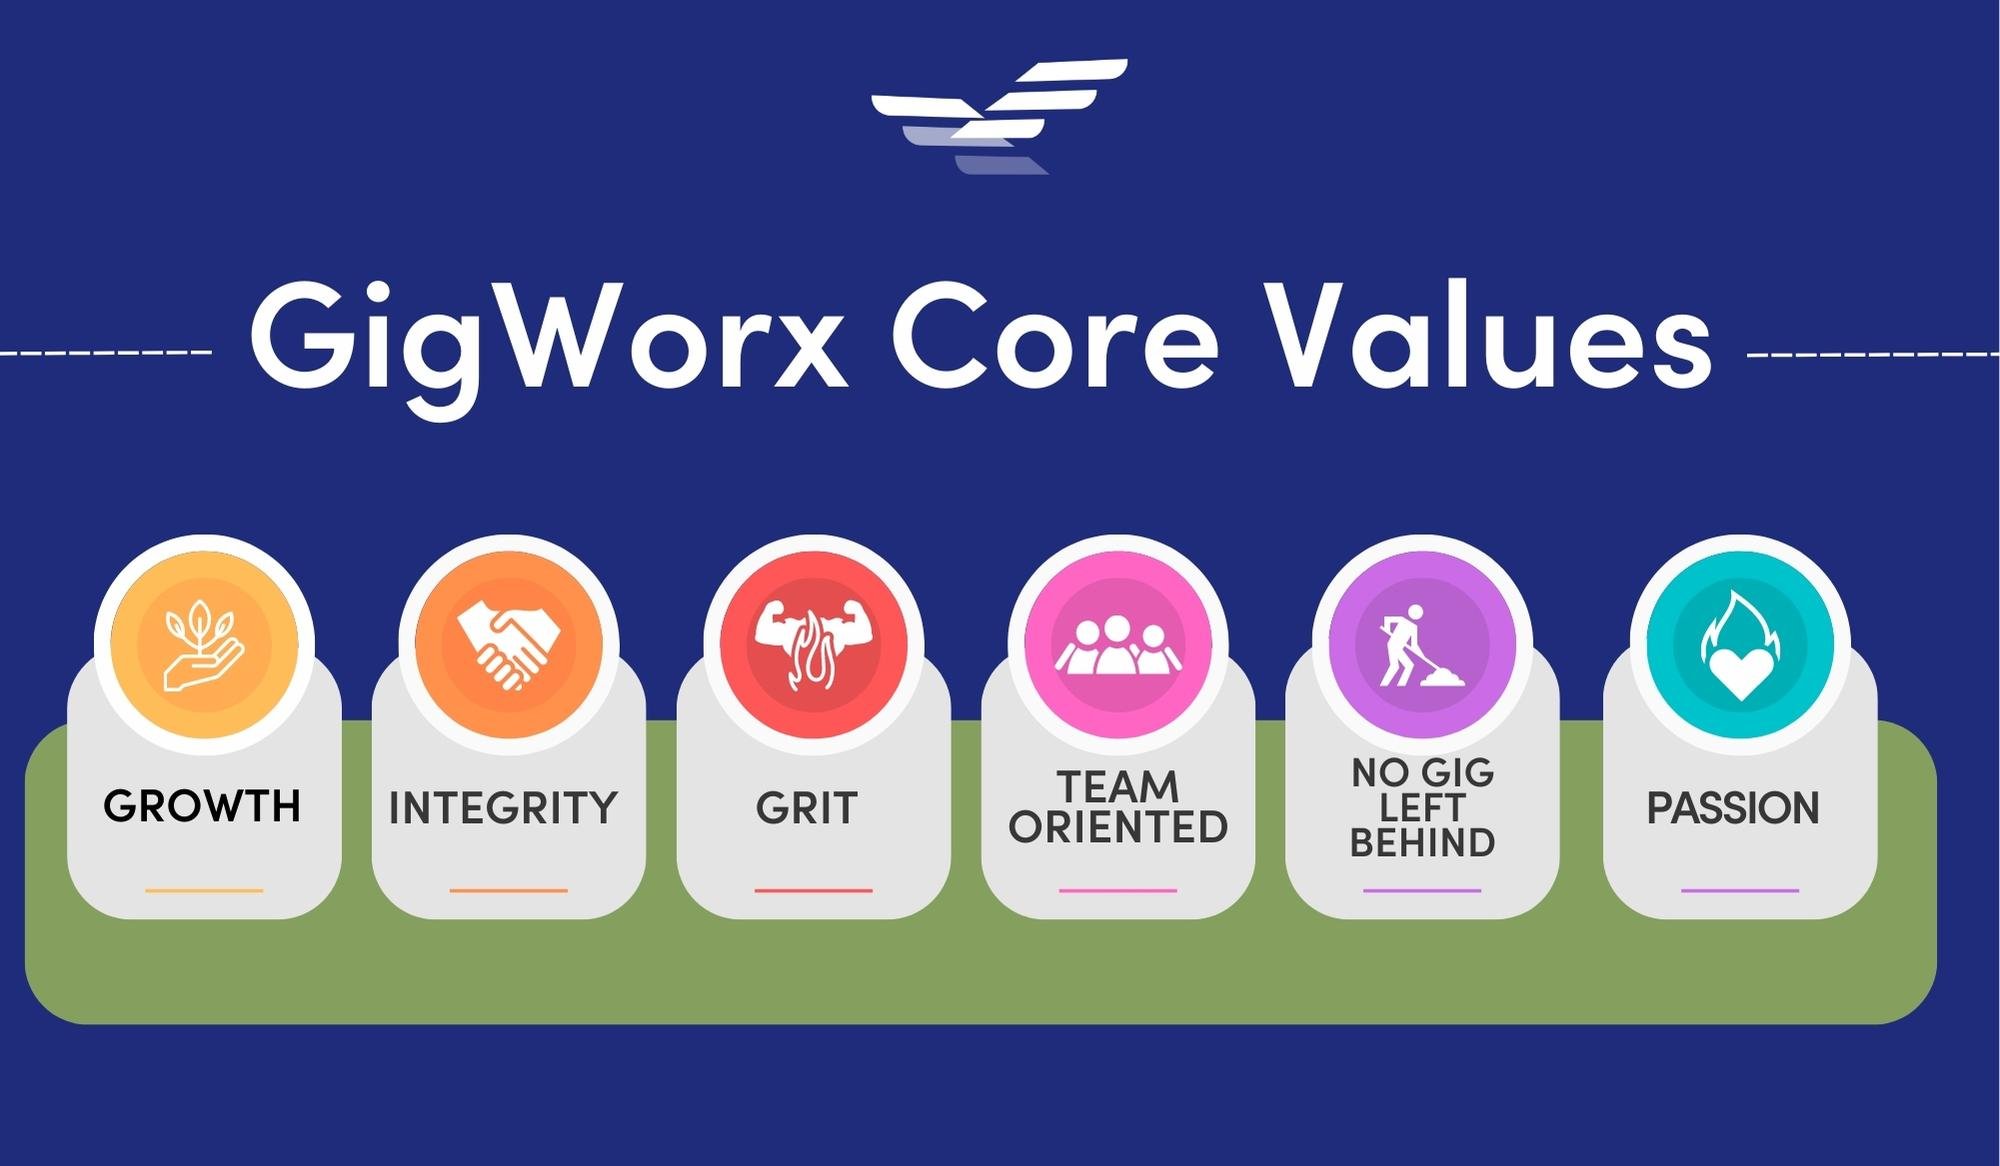 NEW GigWorx Core Values